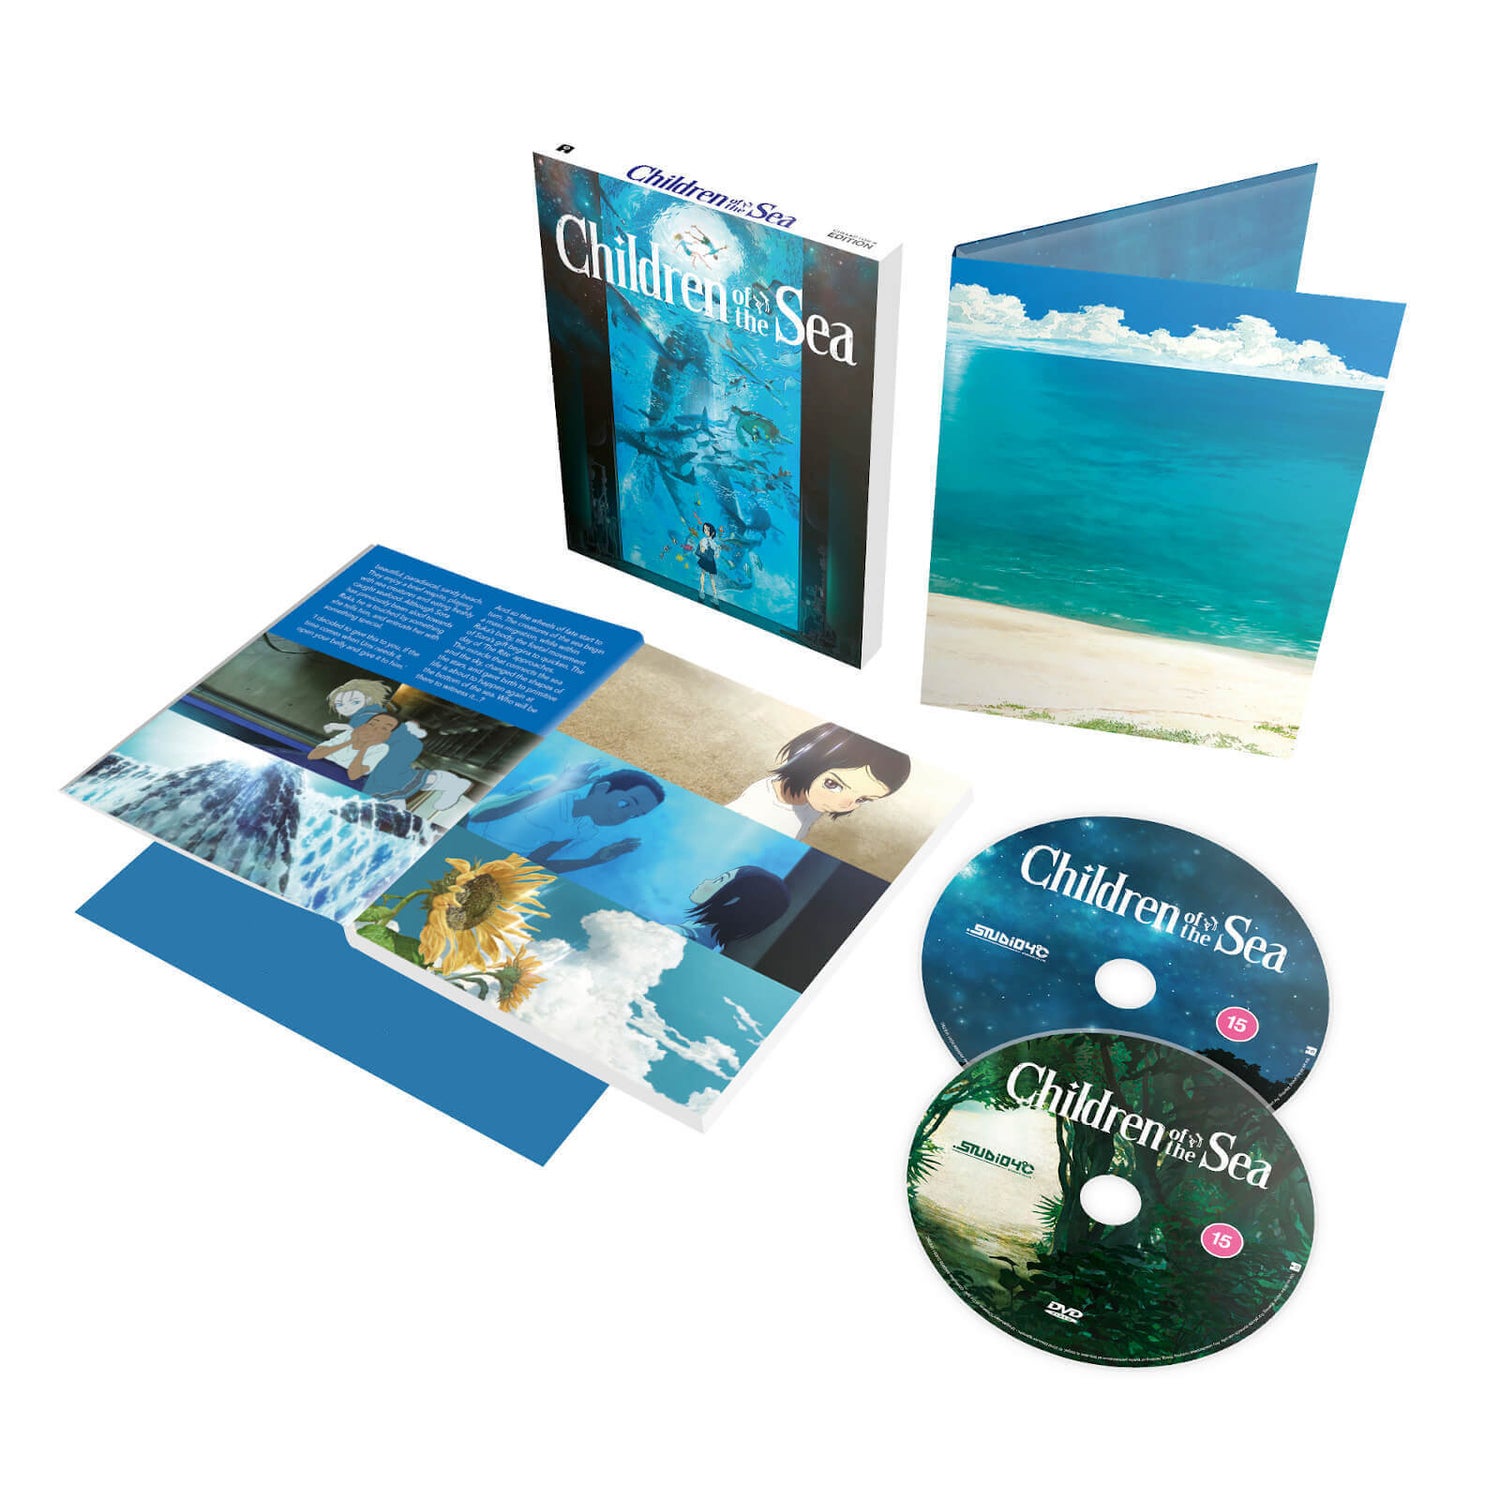 Kinder des Meeres - Collector's Dual Format Edition